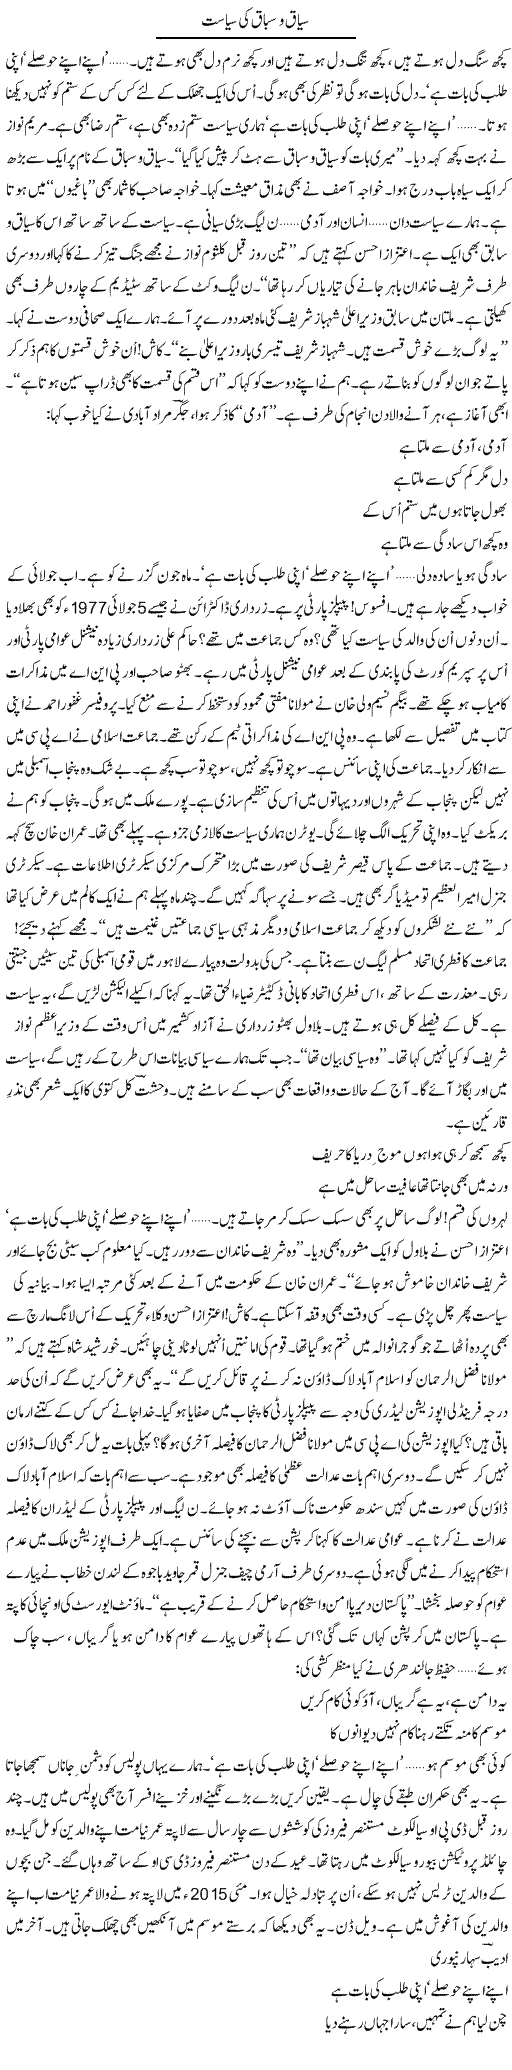 Siyaq O Sabaq Ki Siyasat | Ejaz Hafeez Khan | Daily Urdu Columns